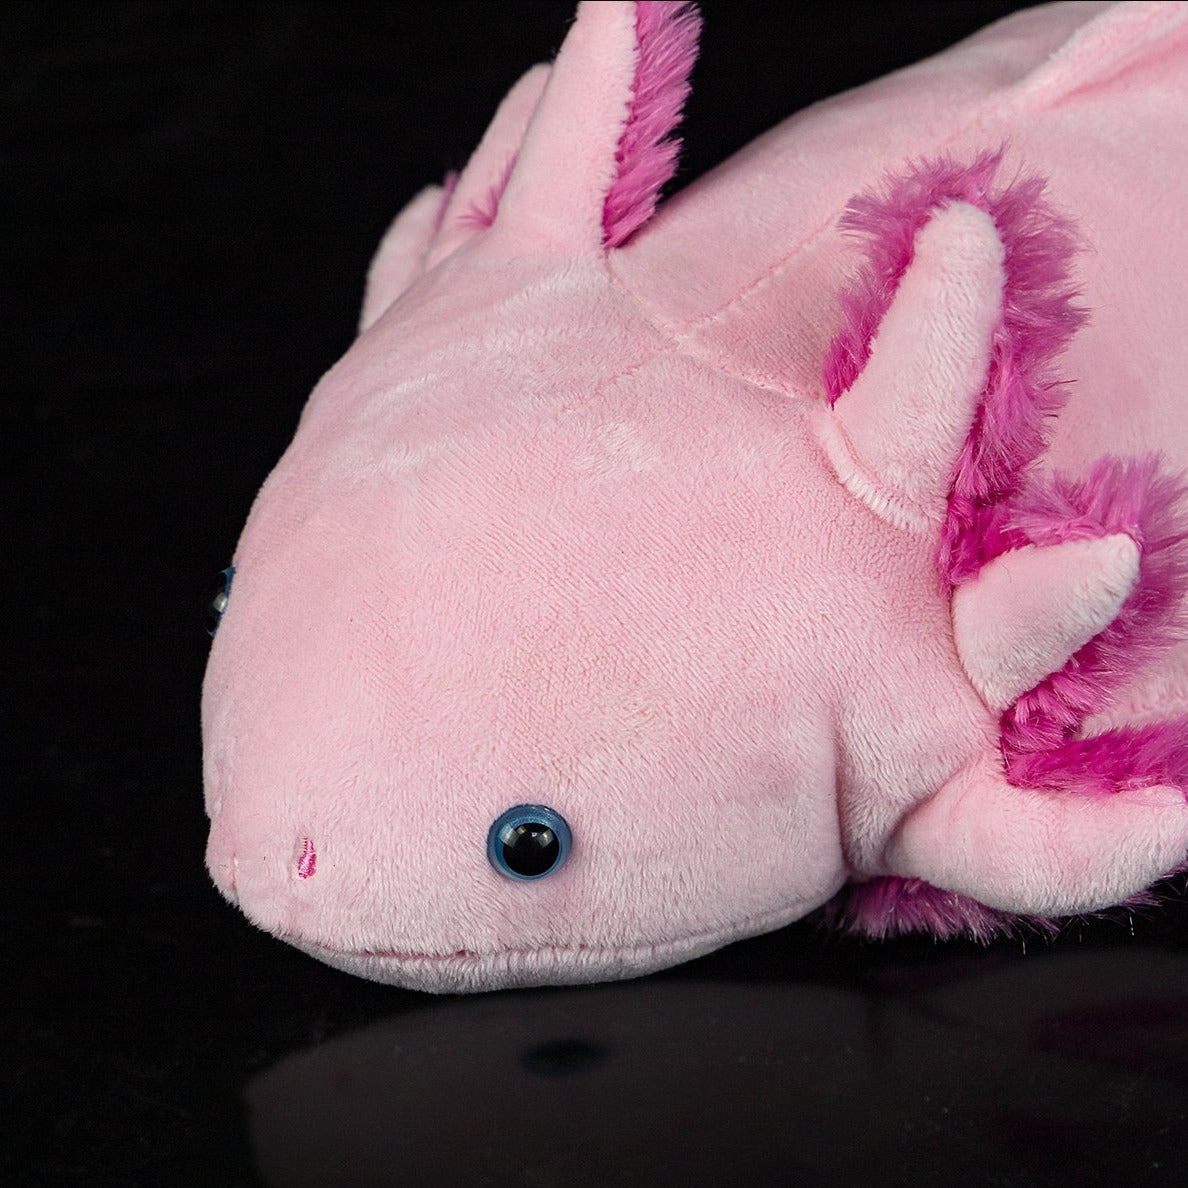 Rosa Axolotl weiches Plüschtier